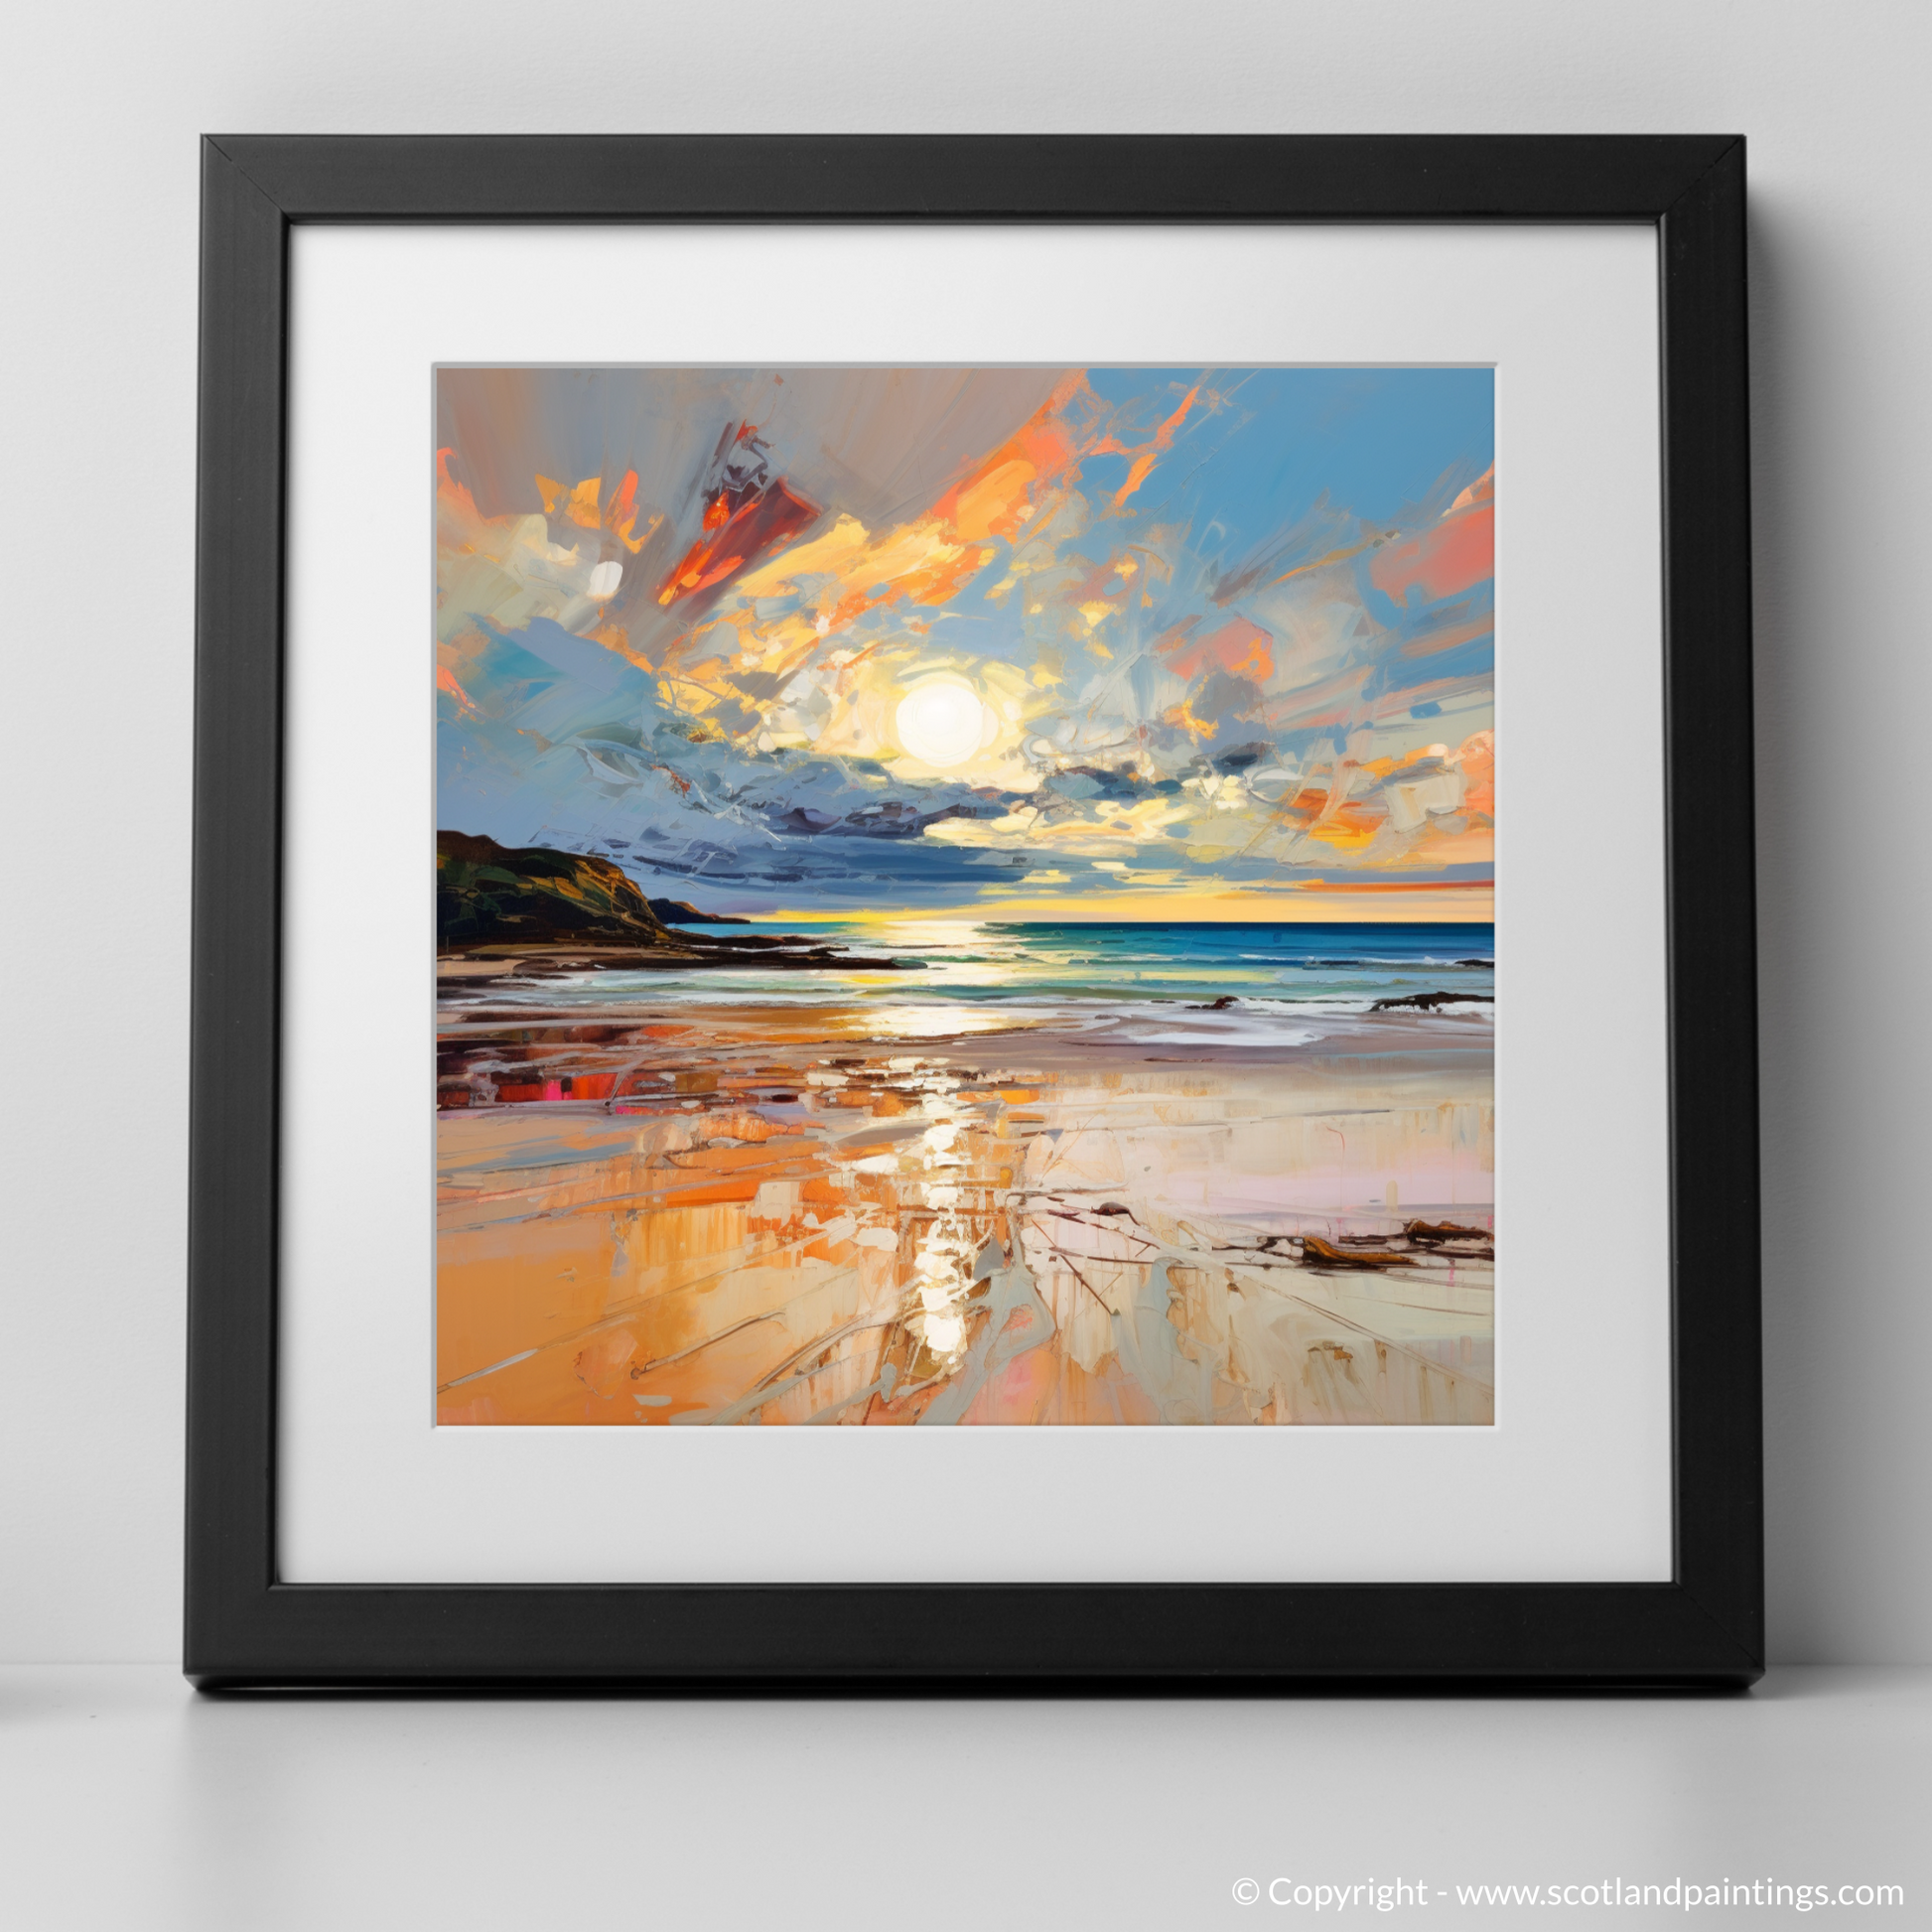 Art Print of Gullane Beach at sunset with a black frame